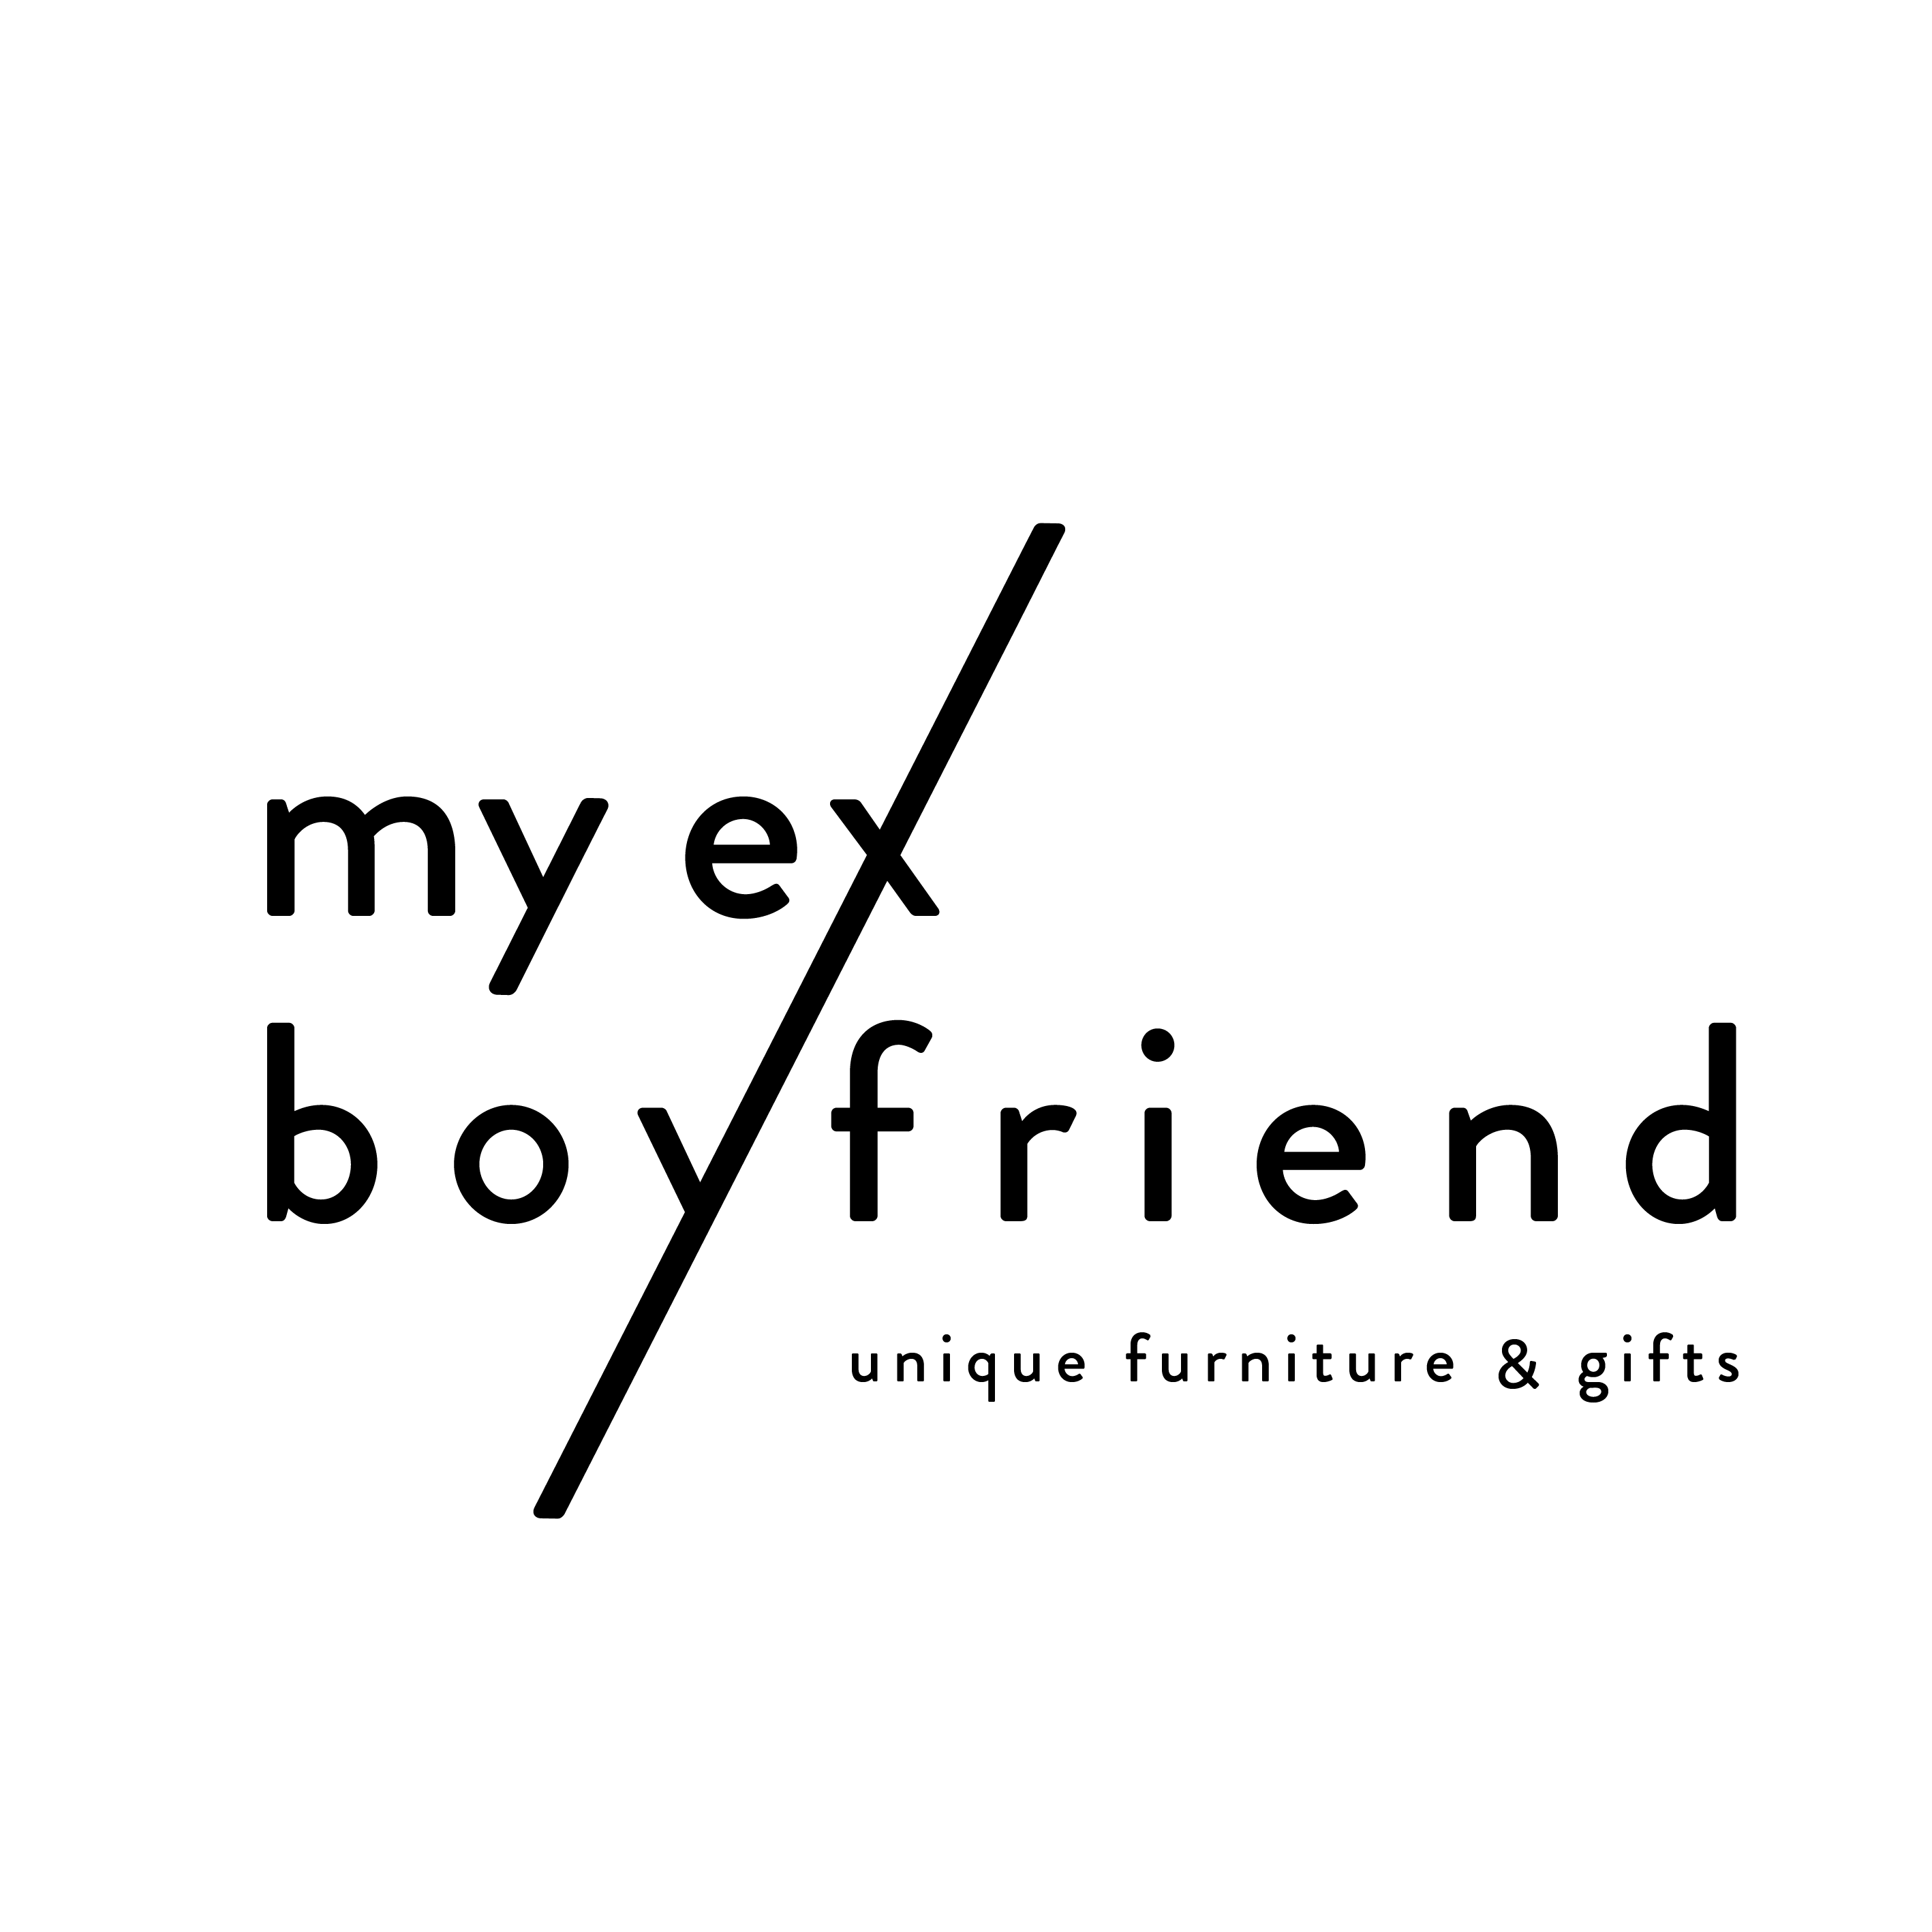 Boyfriend Logo - My Ex Boyfriend